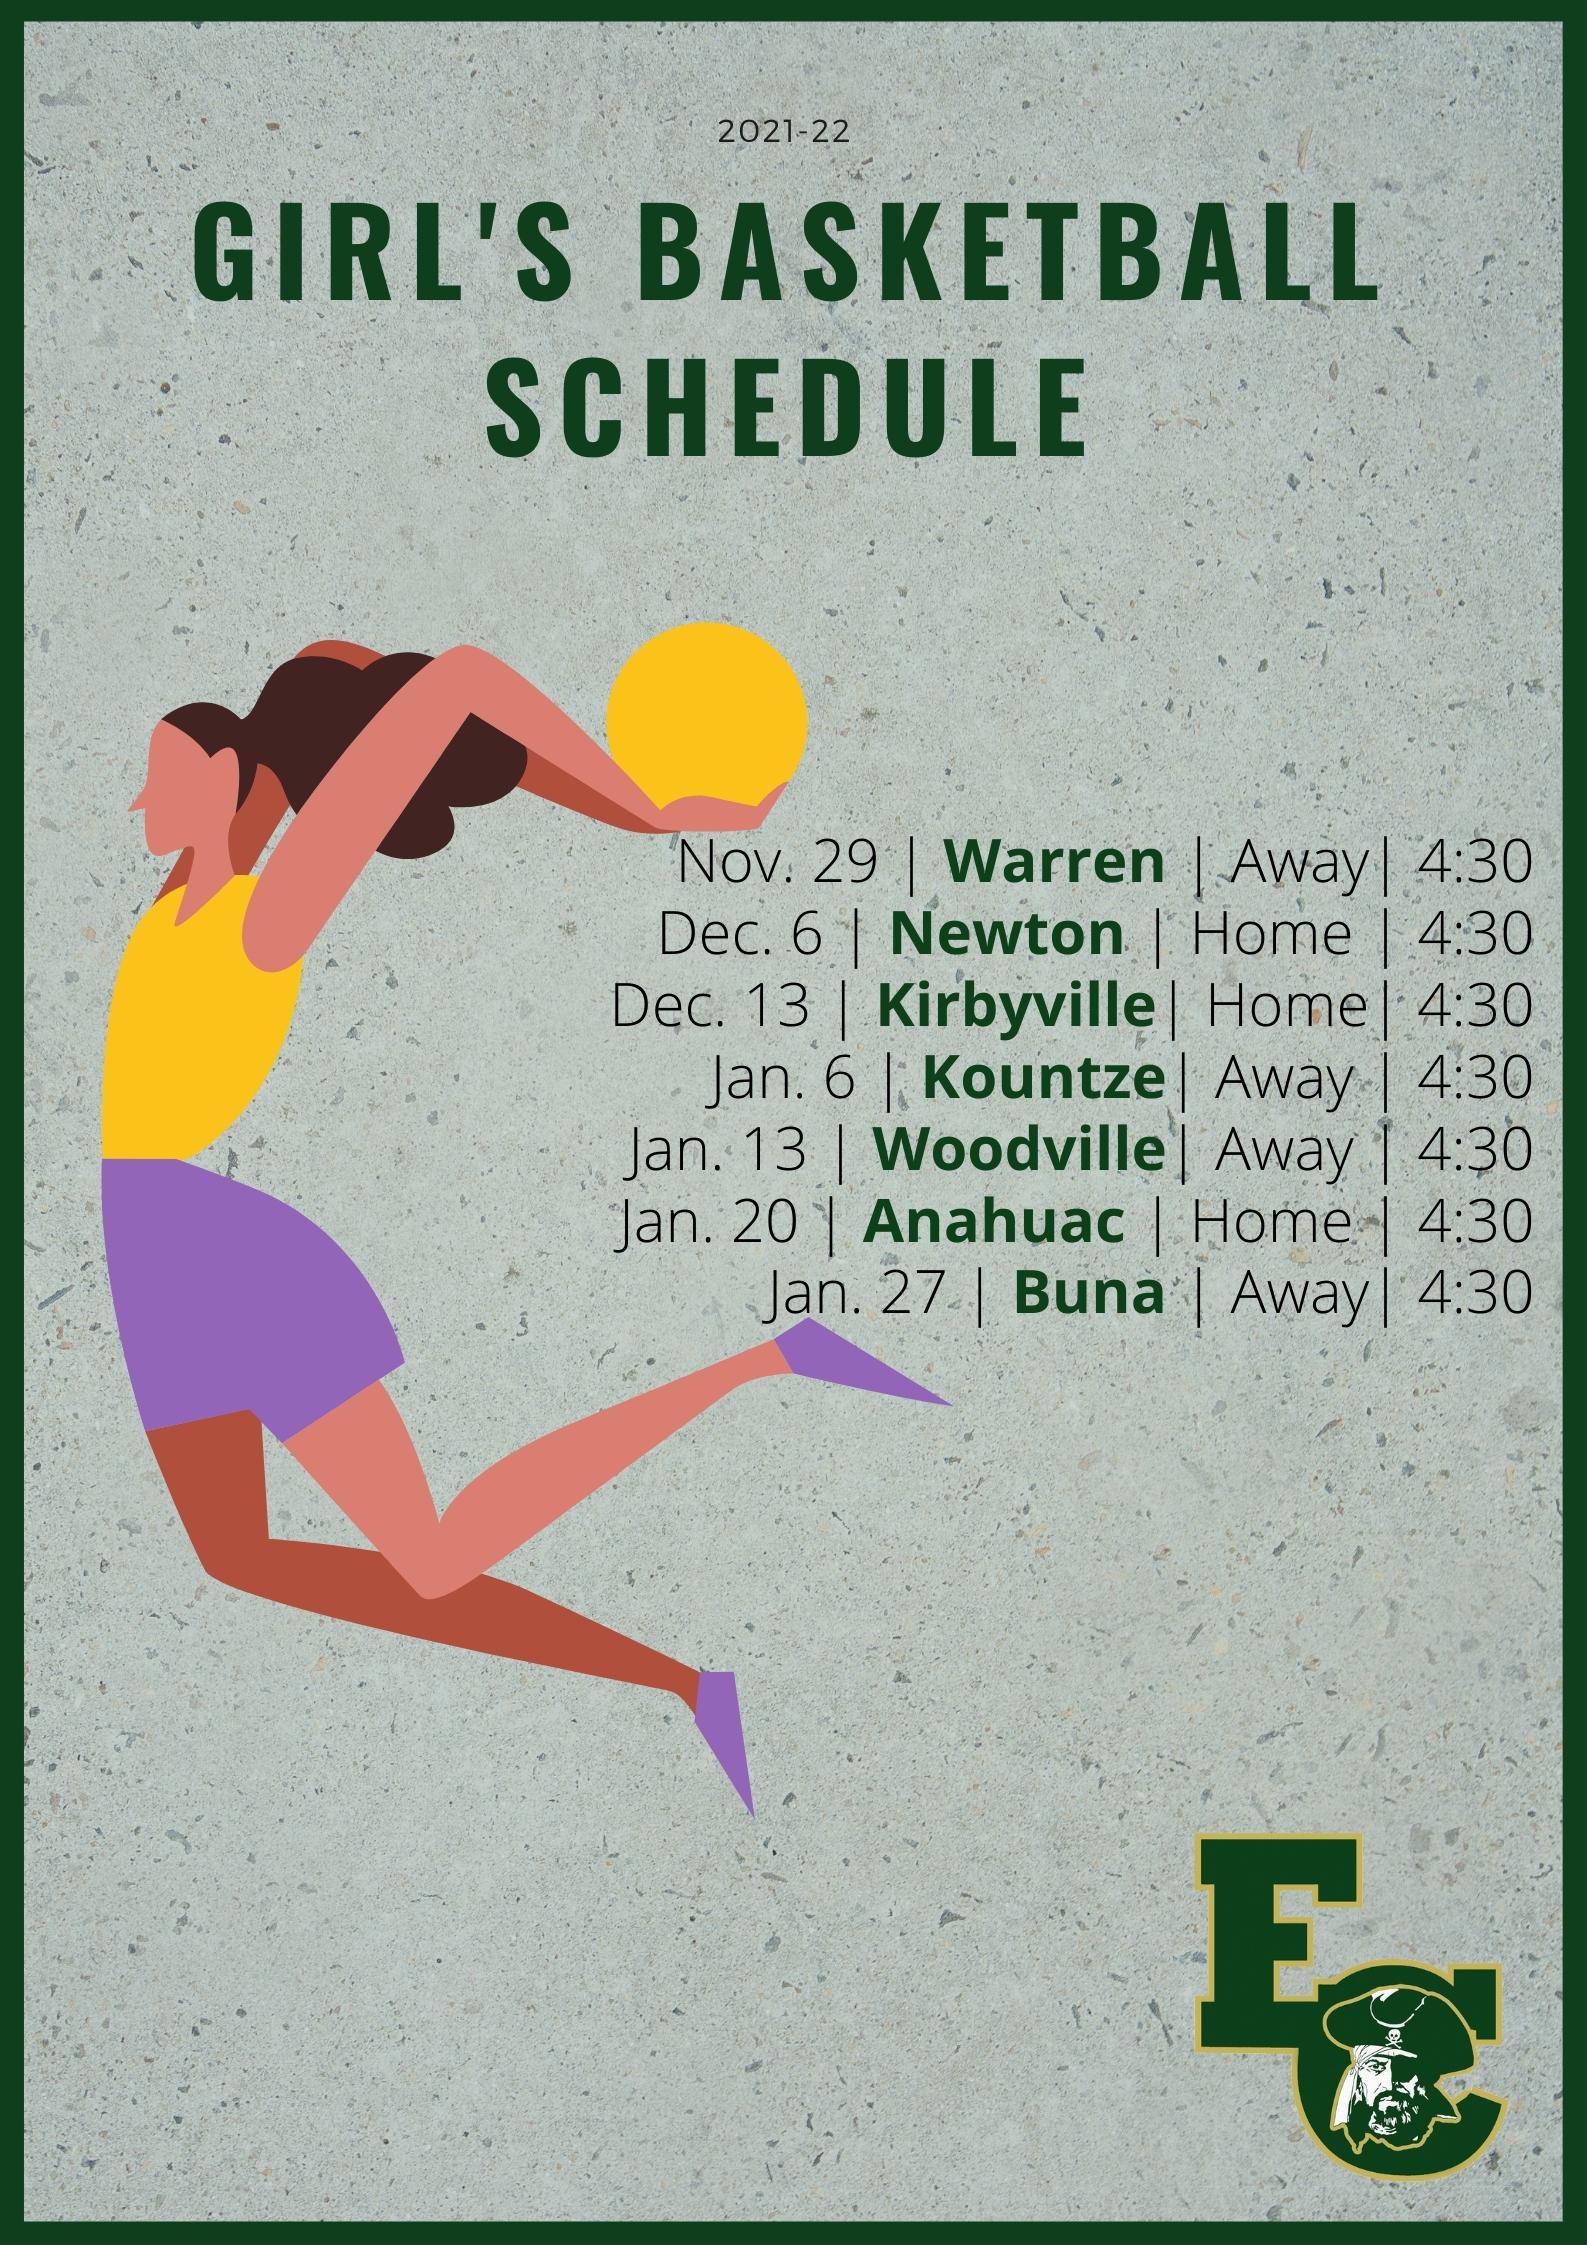 2021-22 Girl's Basketball Schedule